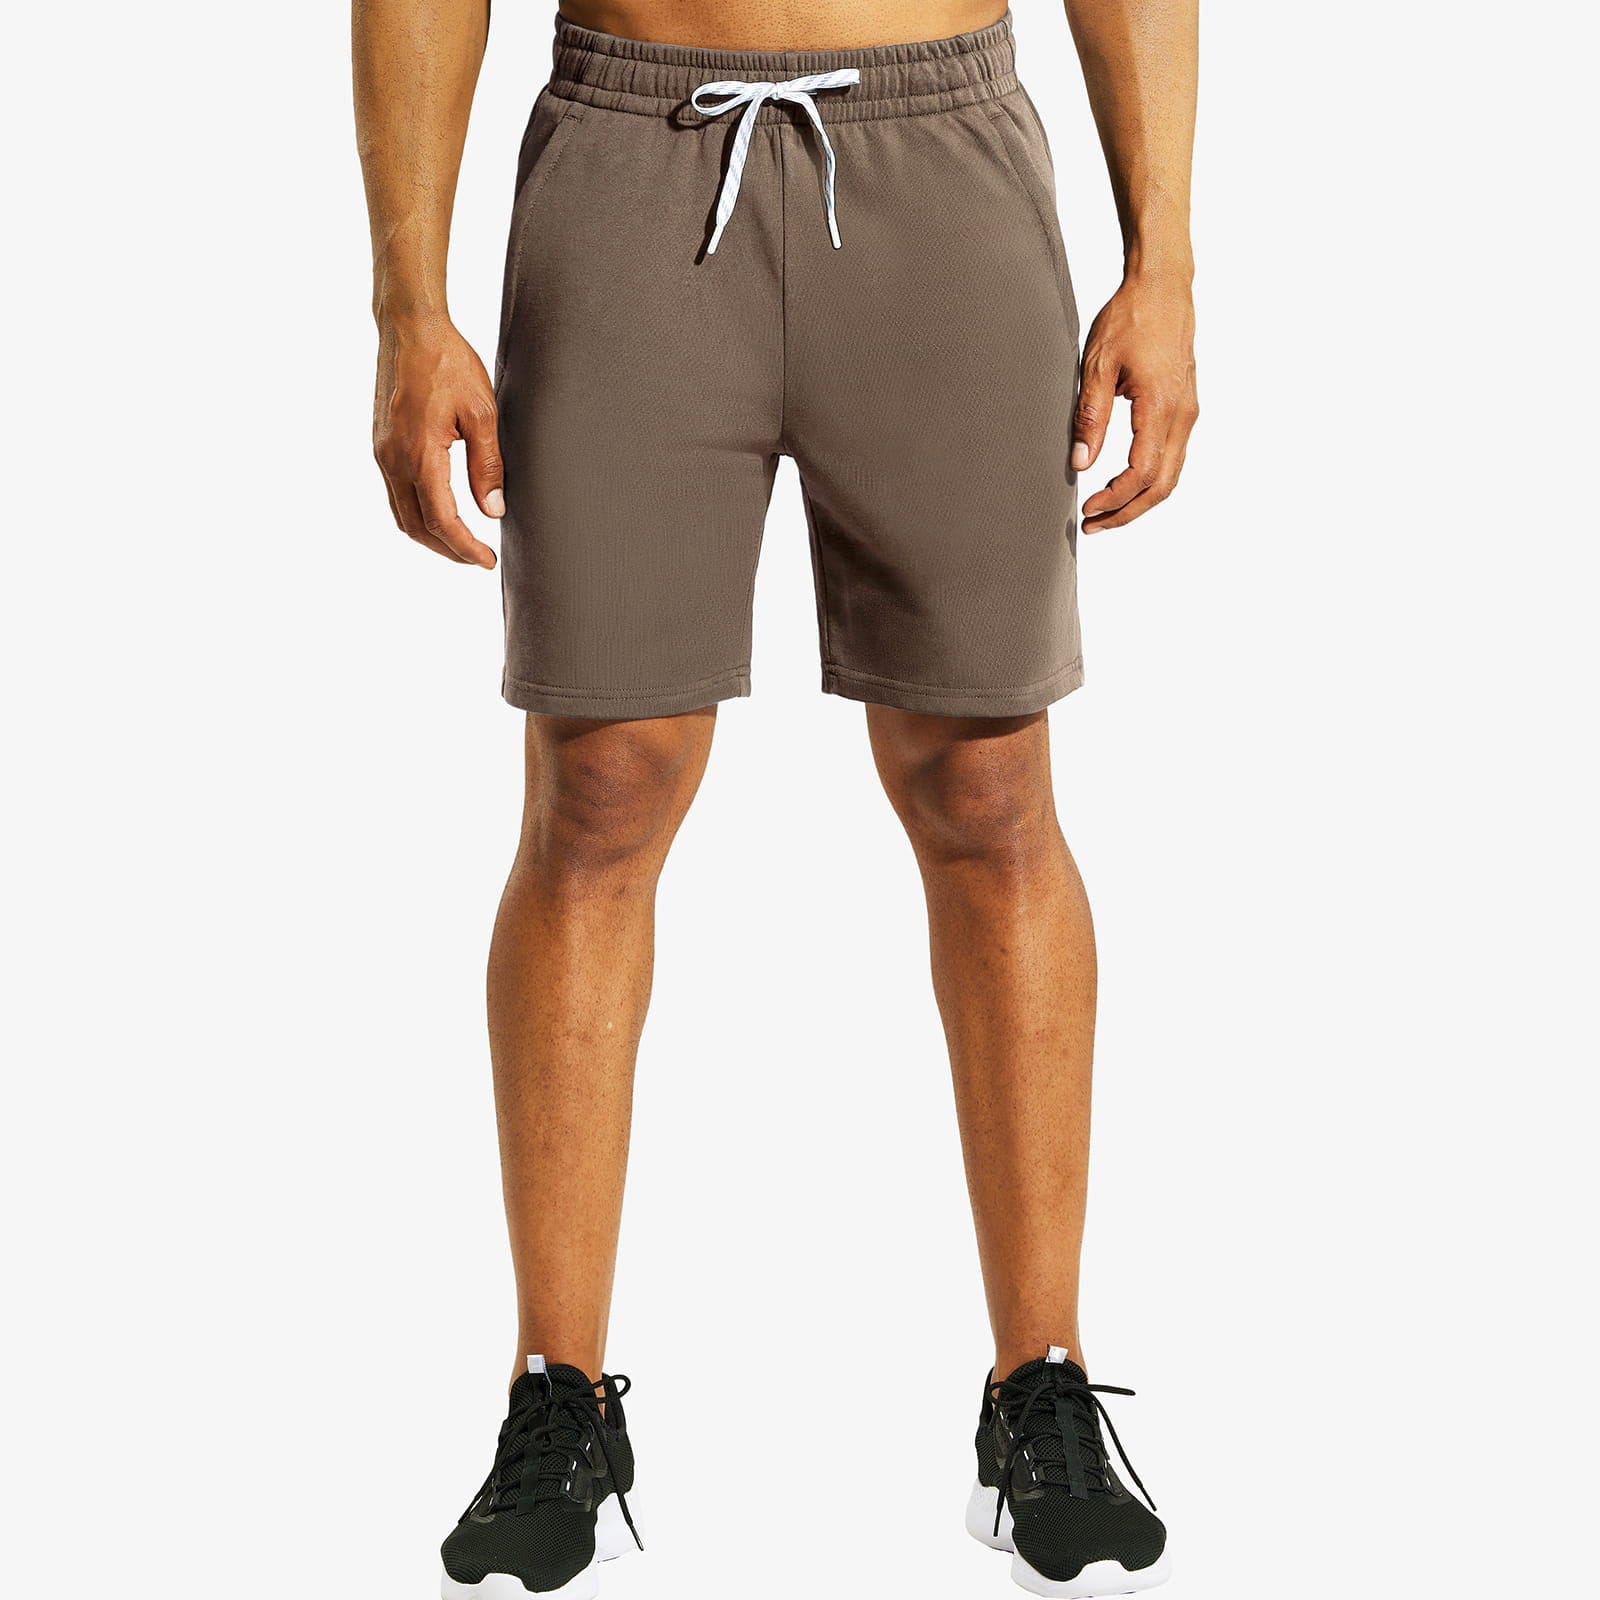 MIER Men's Cotton Sweat Shorts 7 Inch Lounge Jersey Shorts